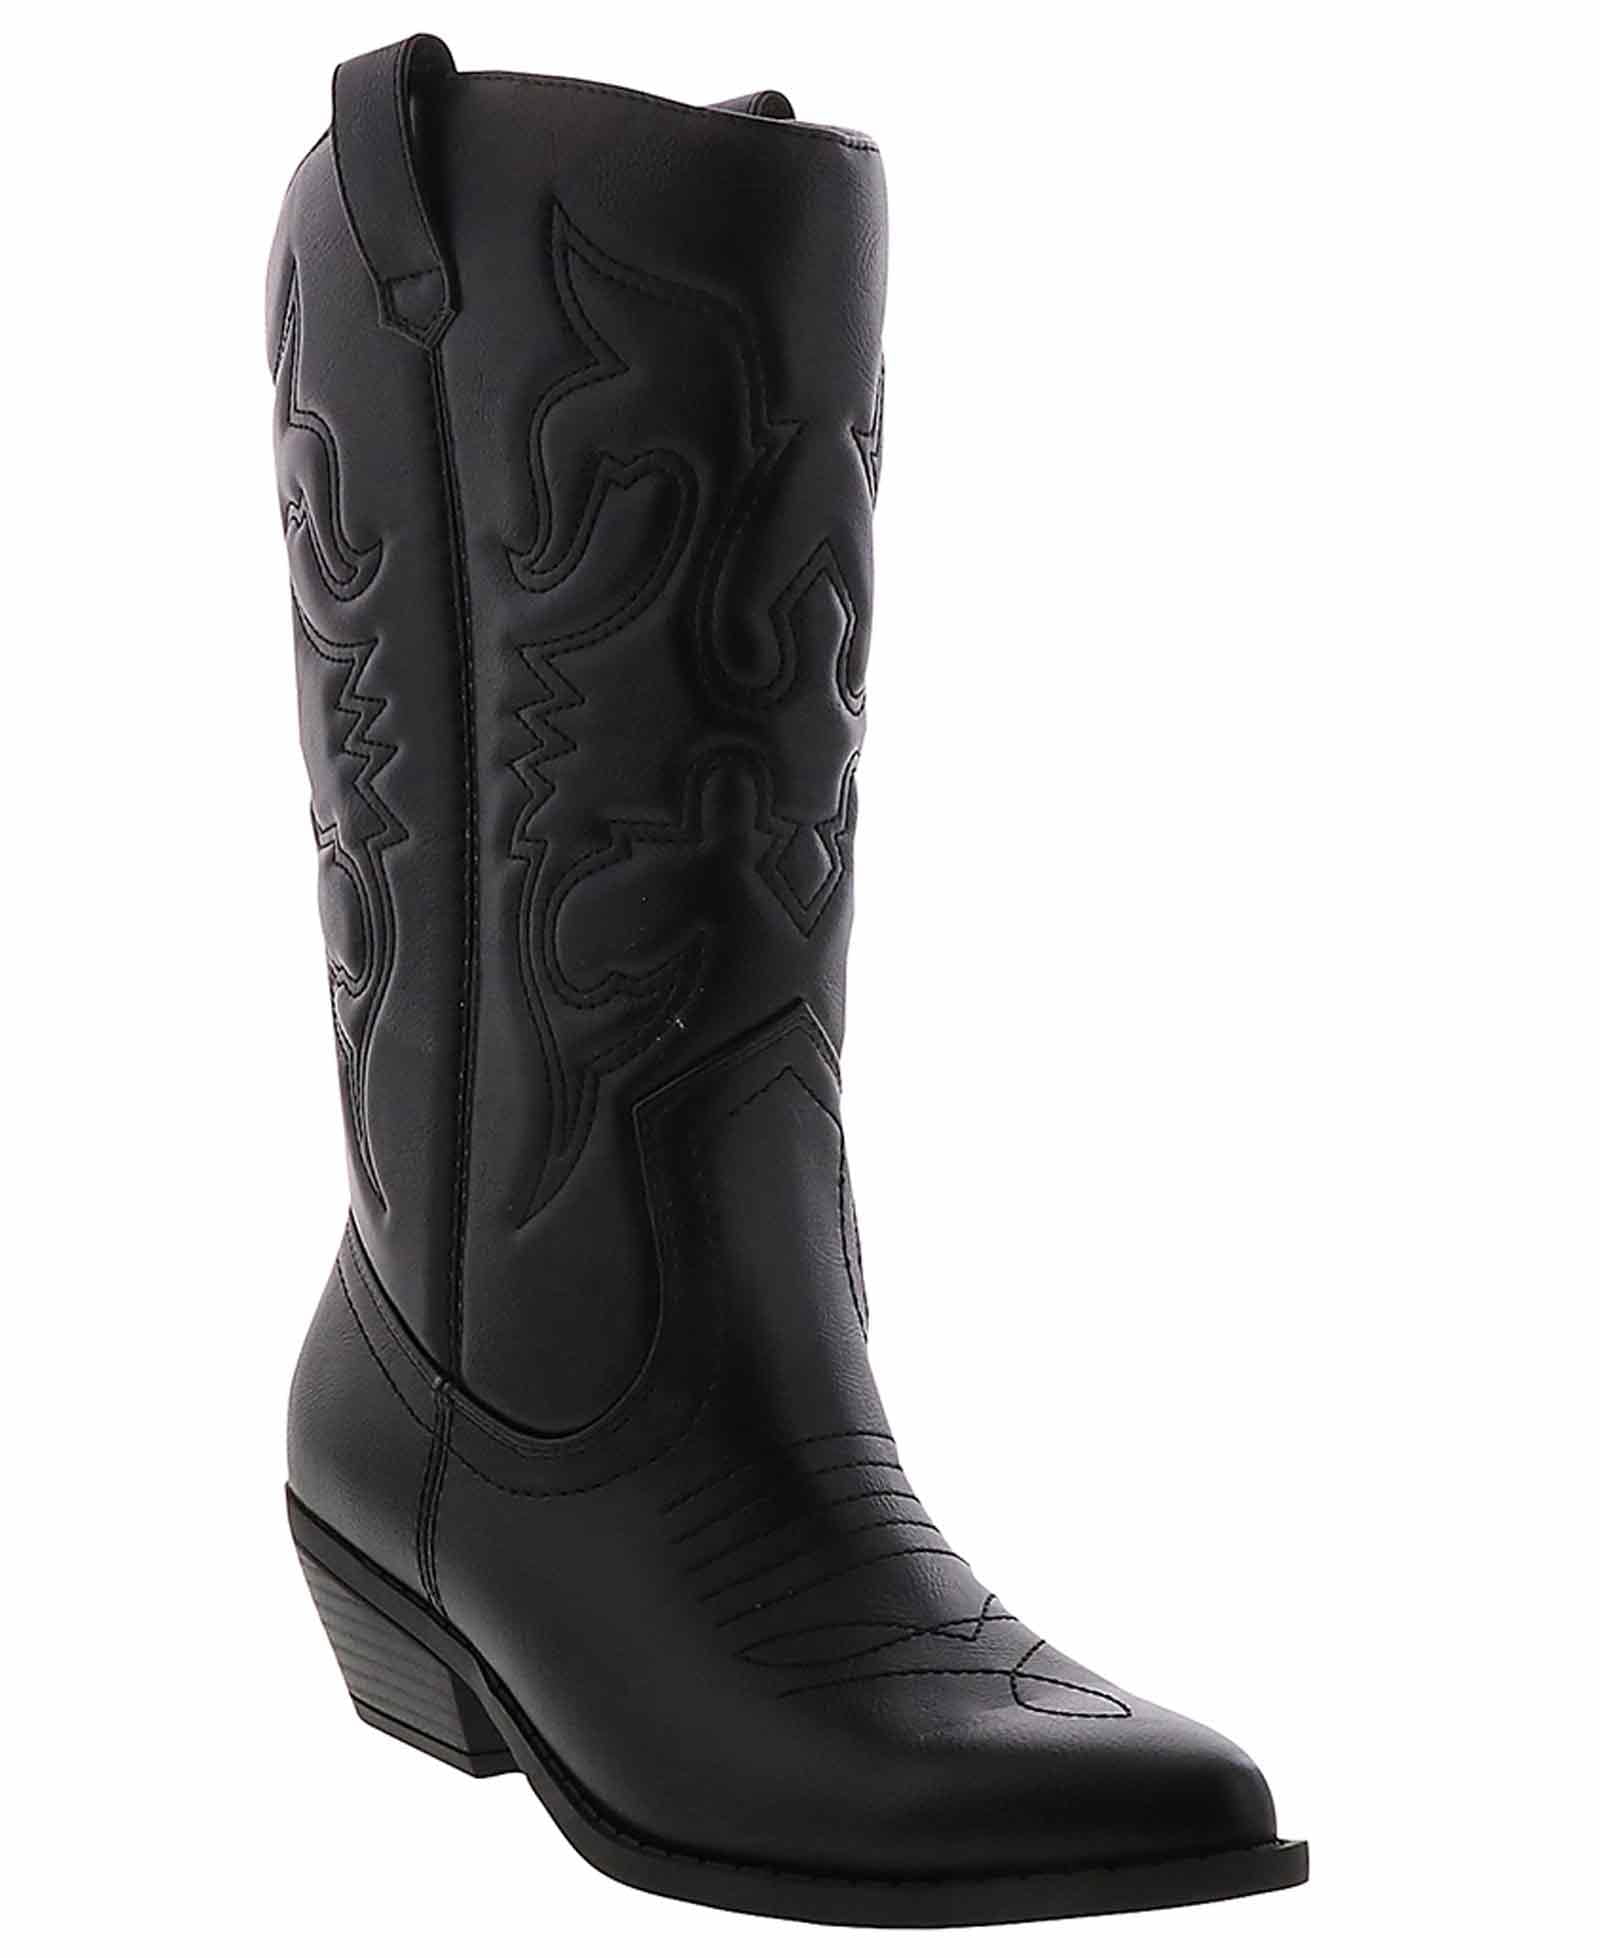 Soda Reno-S Western Boot Black in Size 9 - Walmart.com